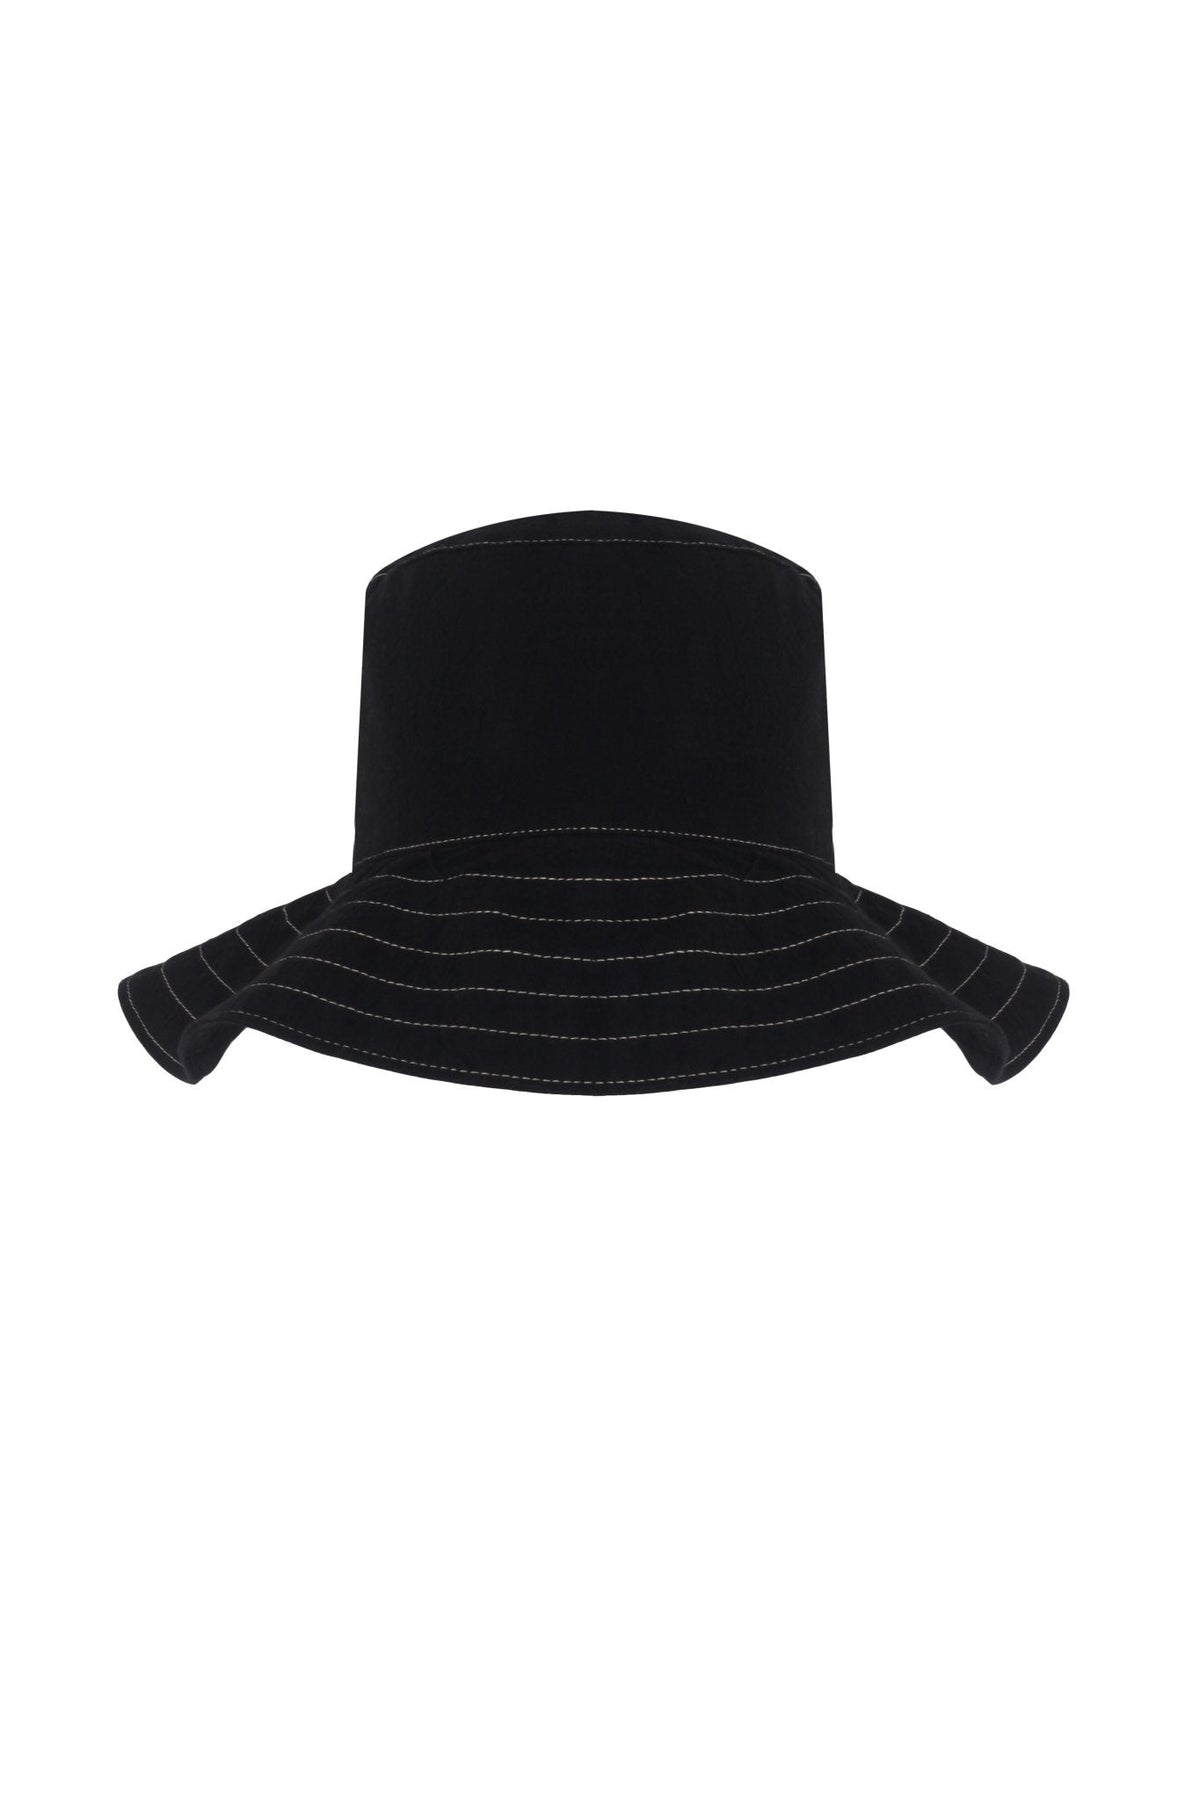 THE HAND LOOM Playa Contrast Stitch Bucket Hat